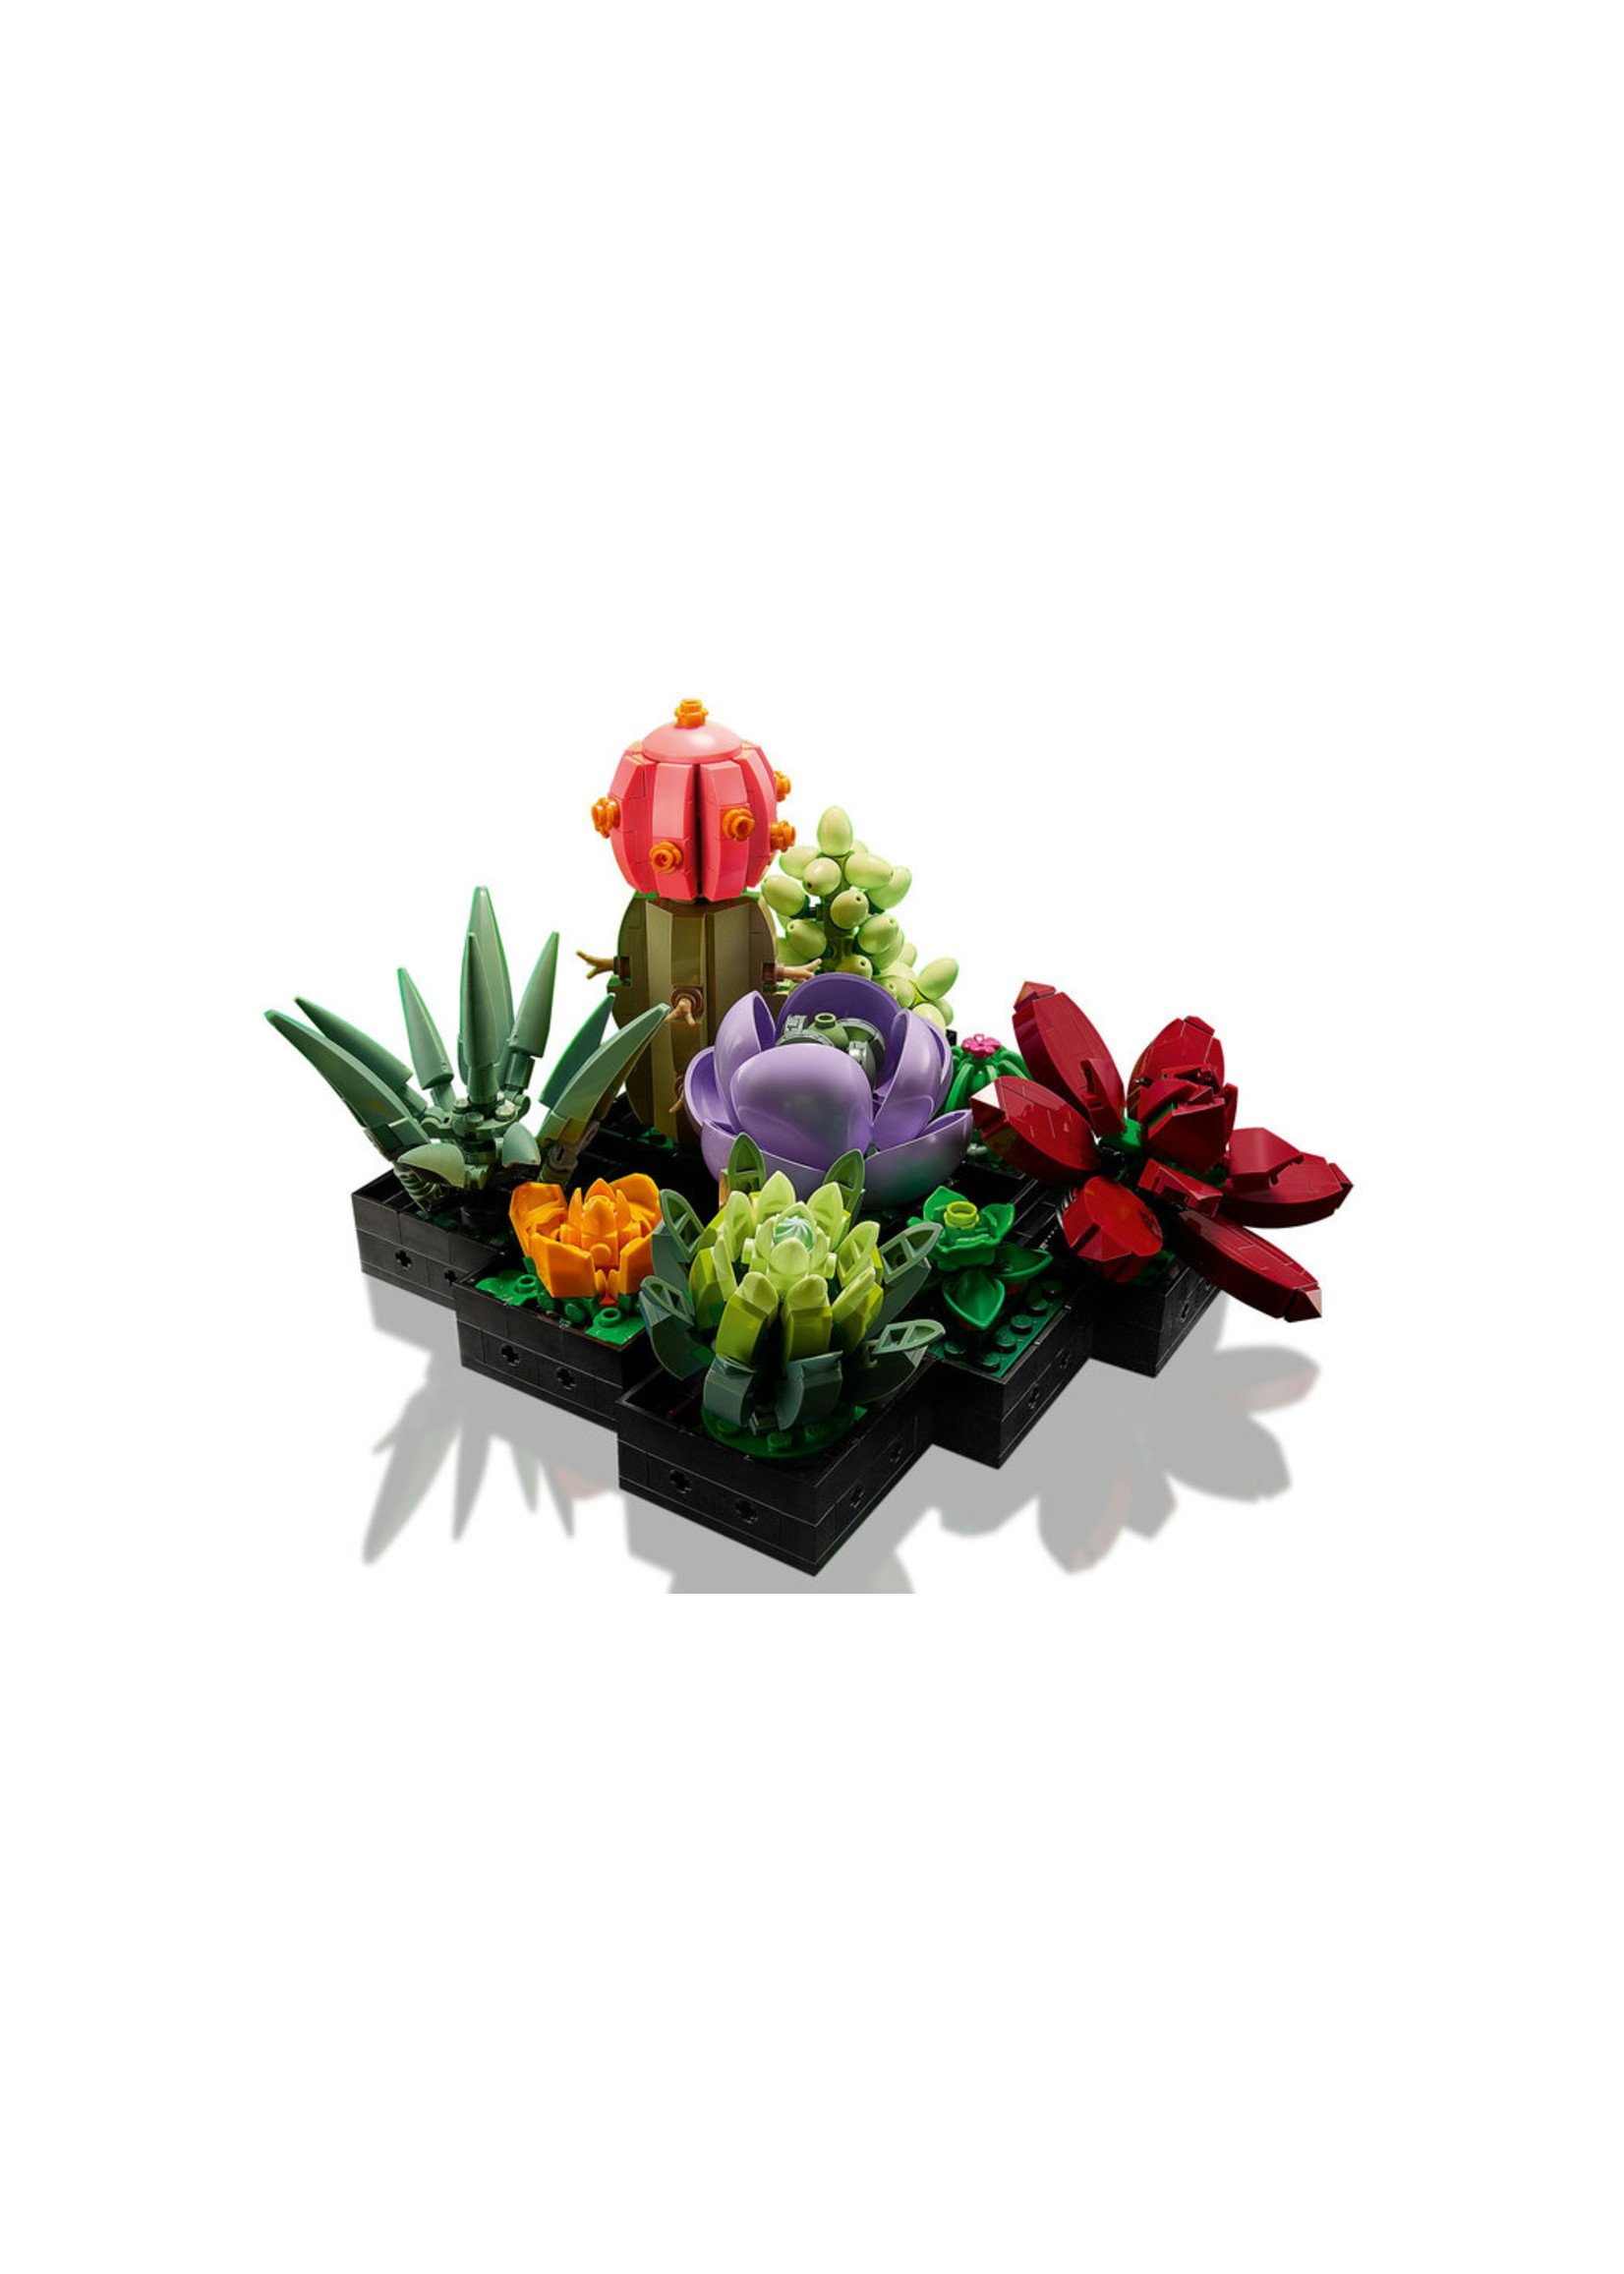 LEGO 10309 - Succulents